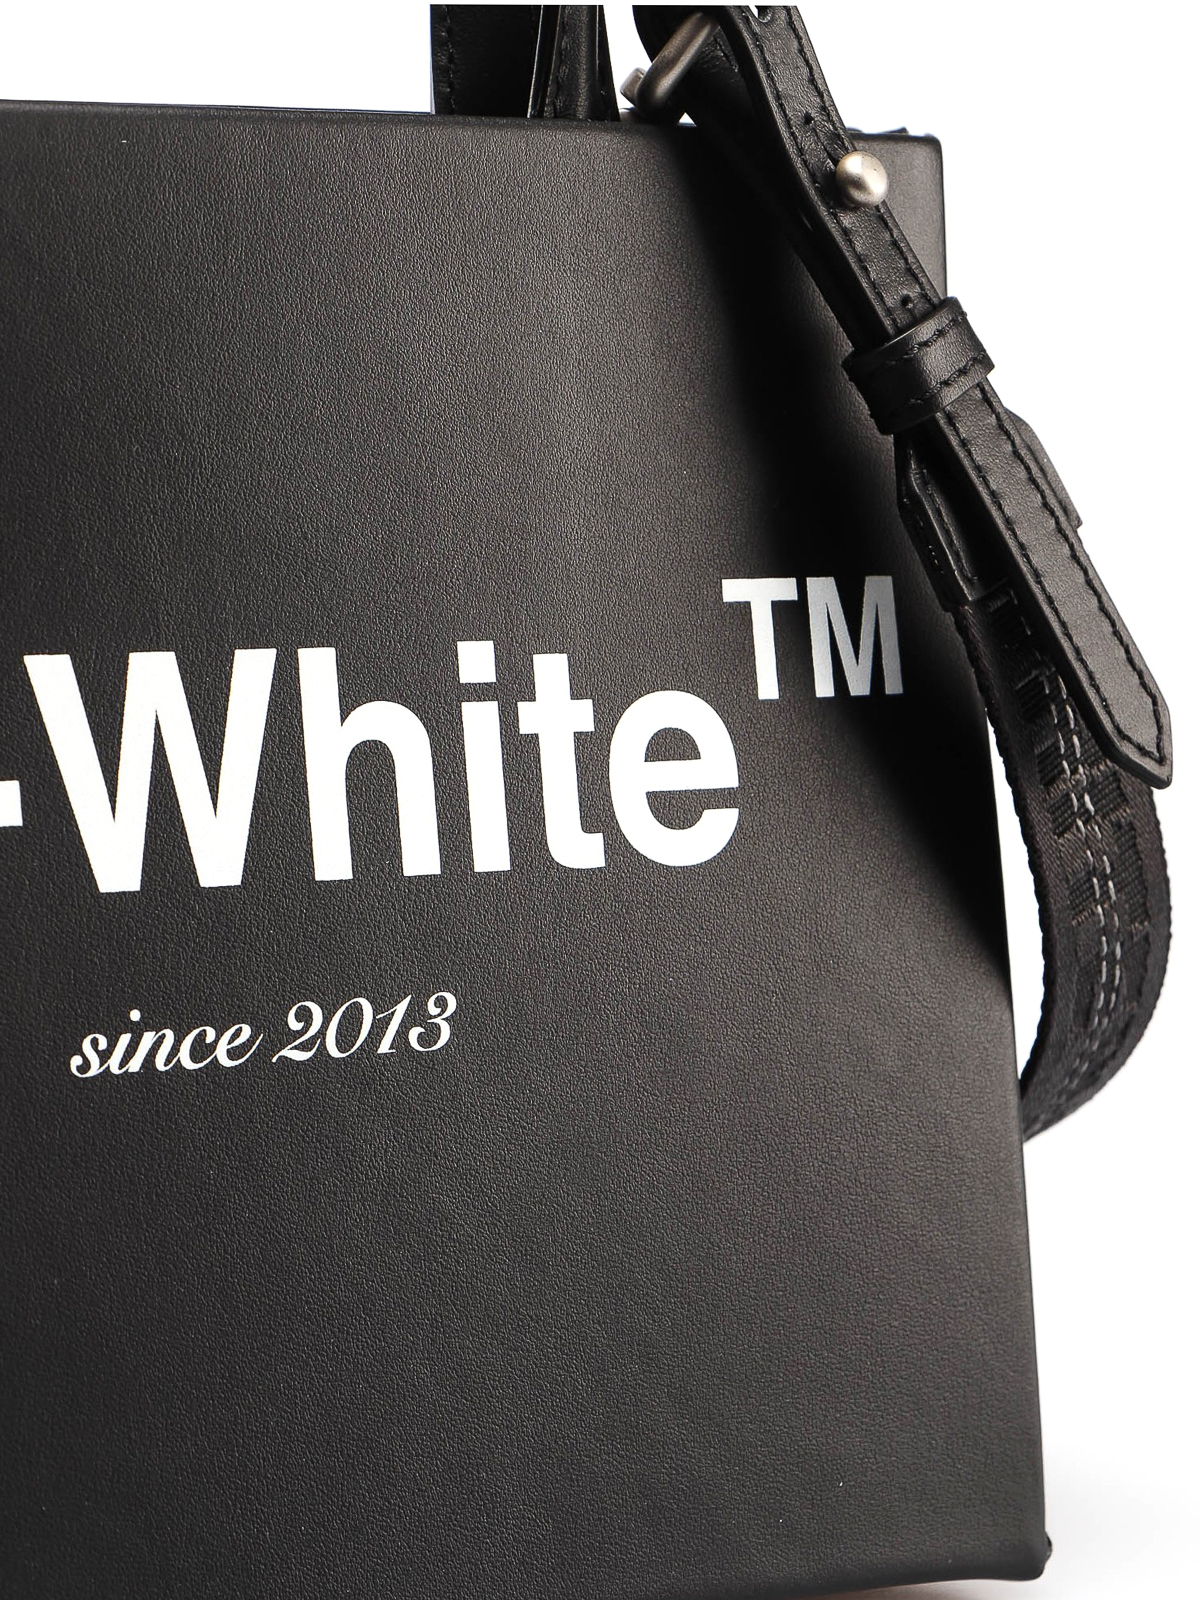 Cross body bags Off-White - Box Mini leather bag